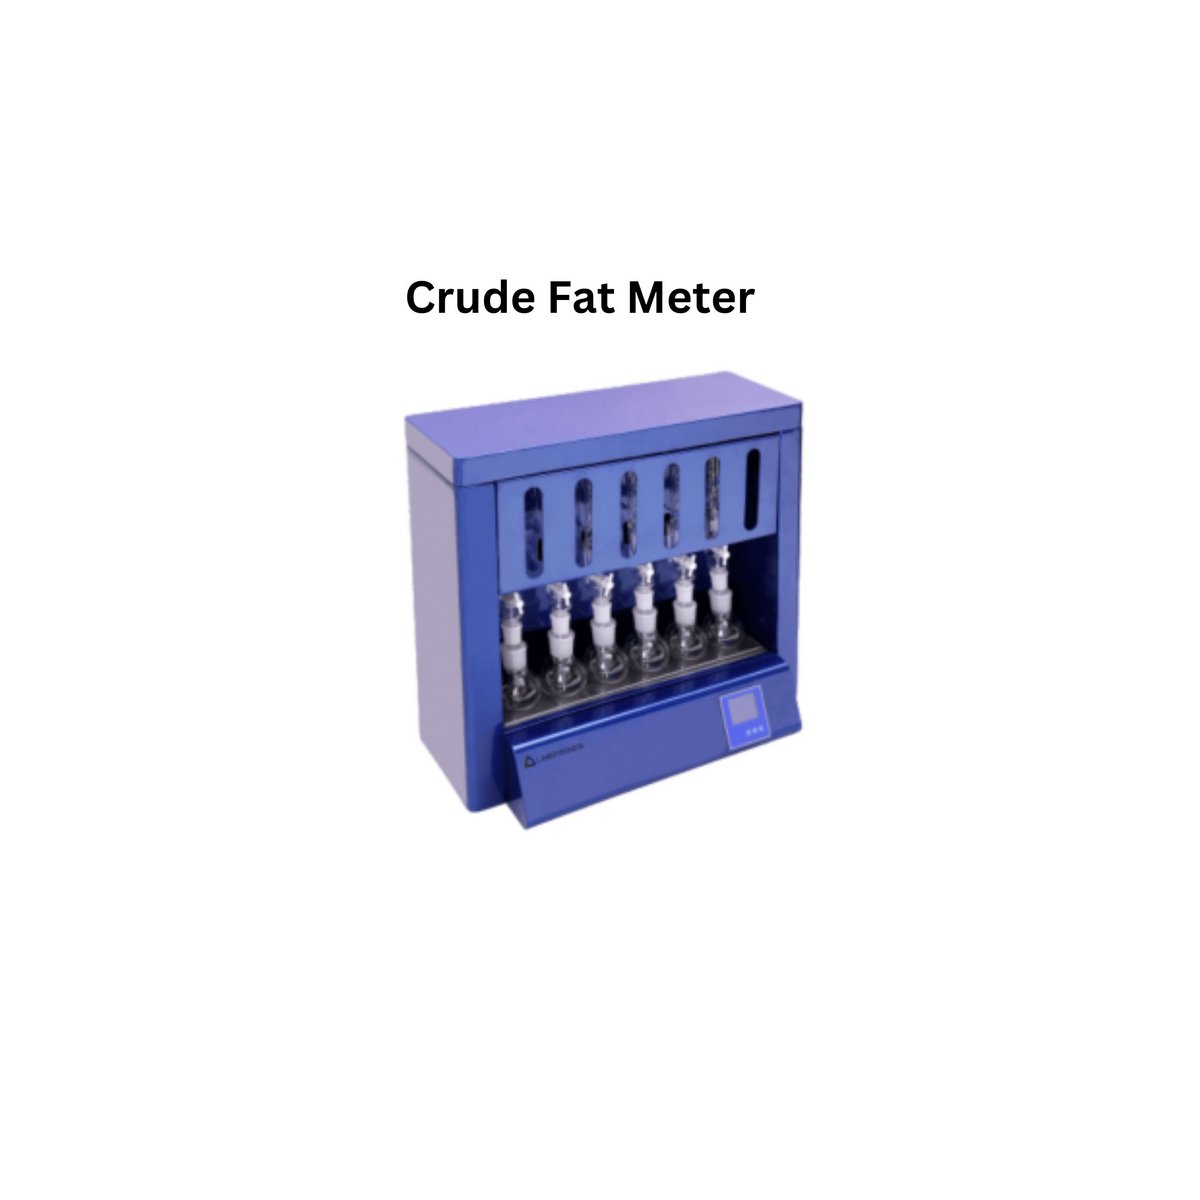 Crude Fat Meter.jpg